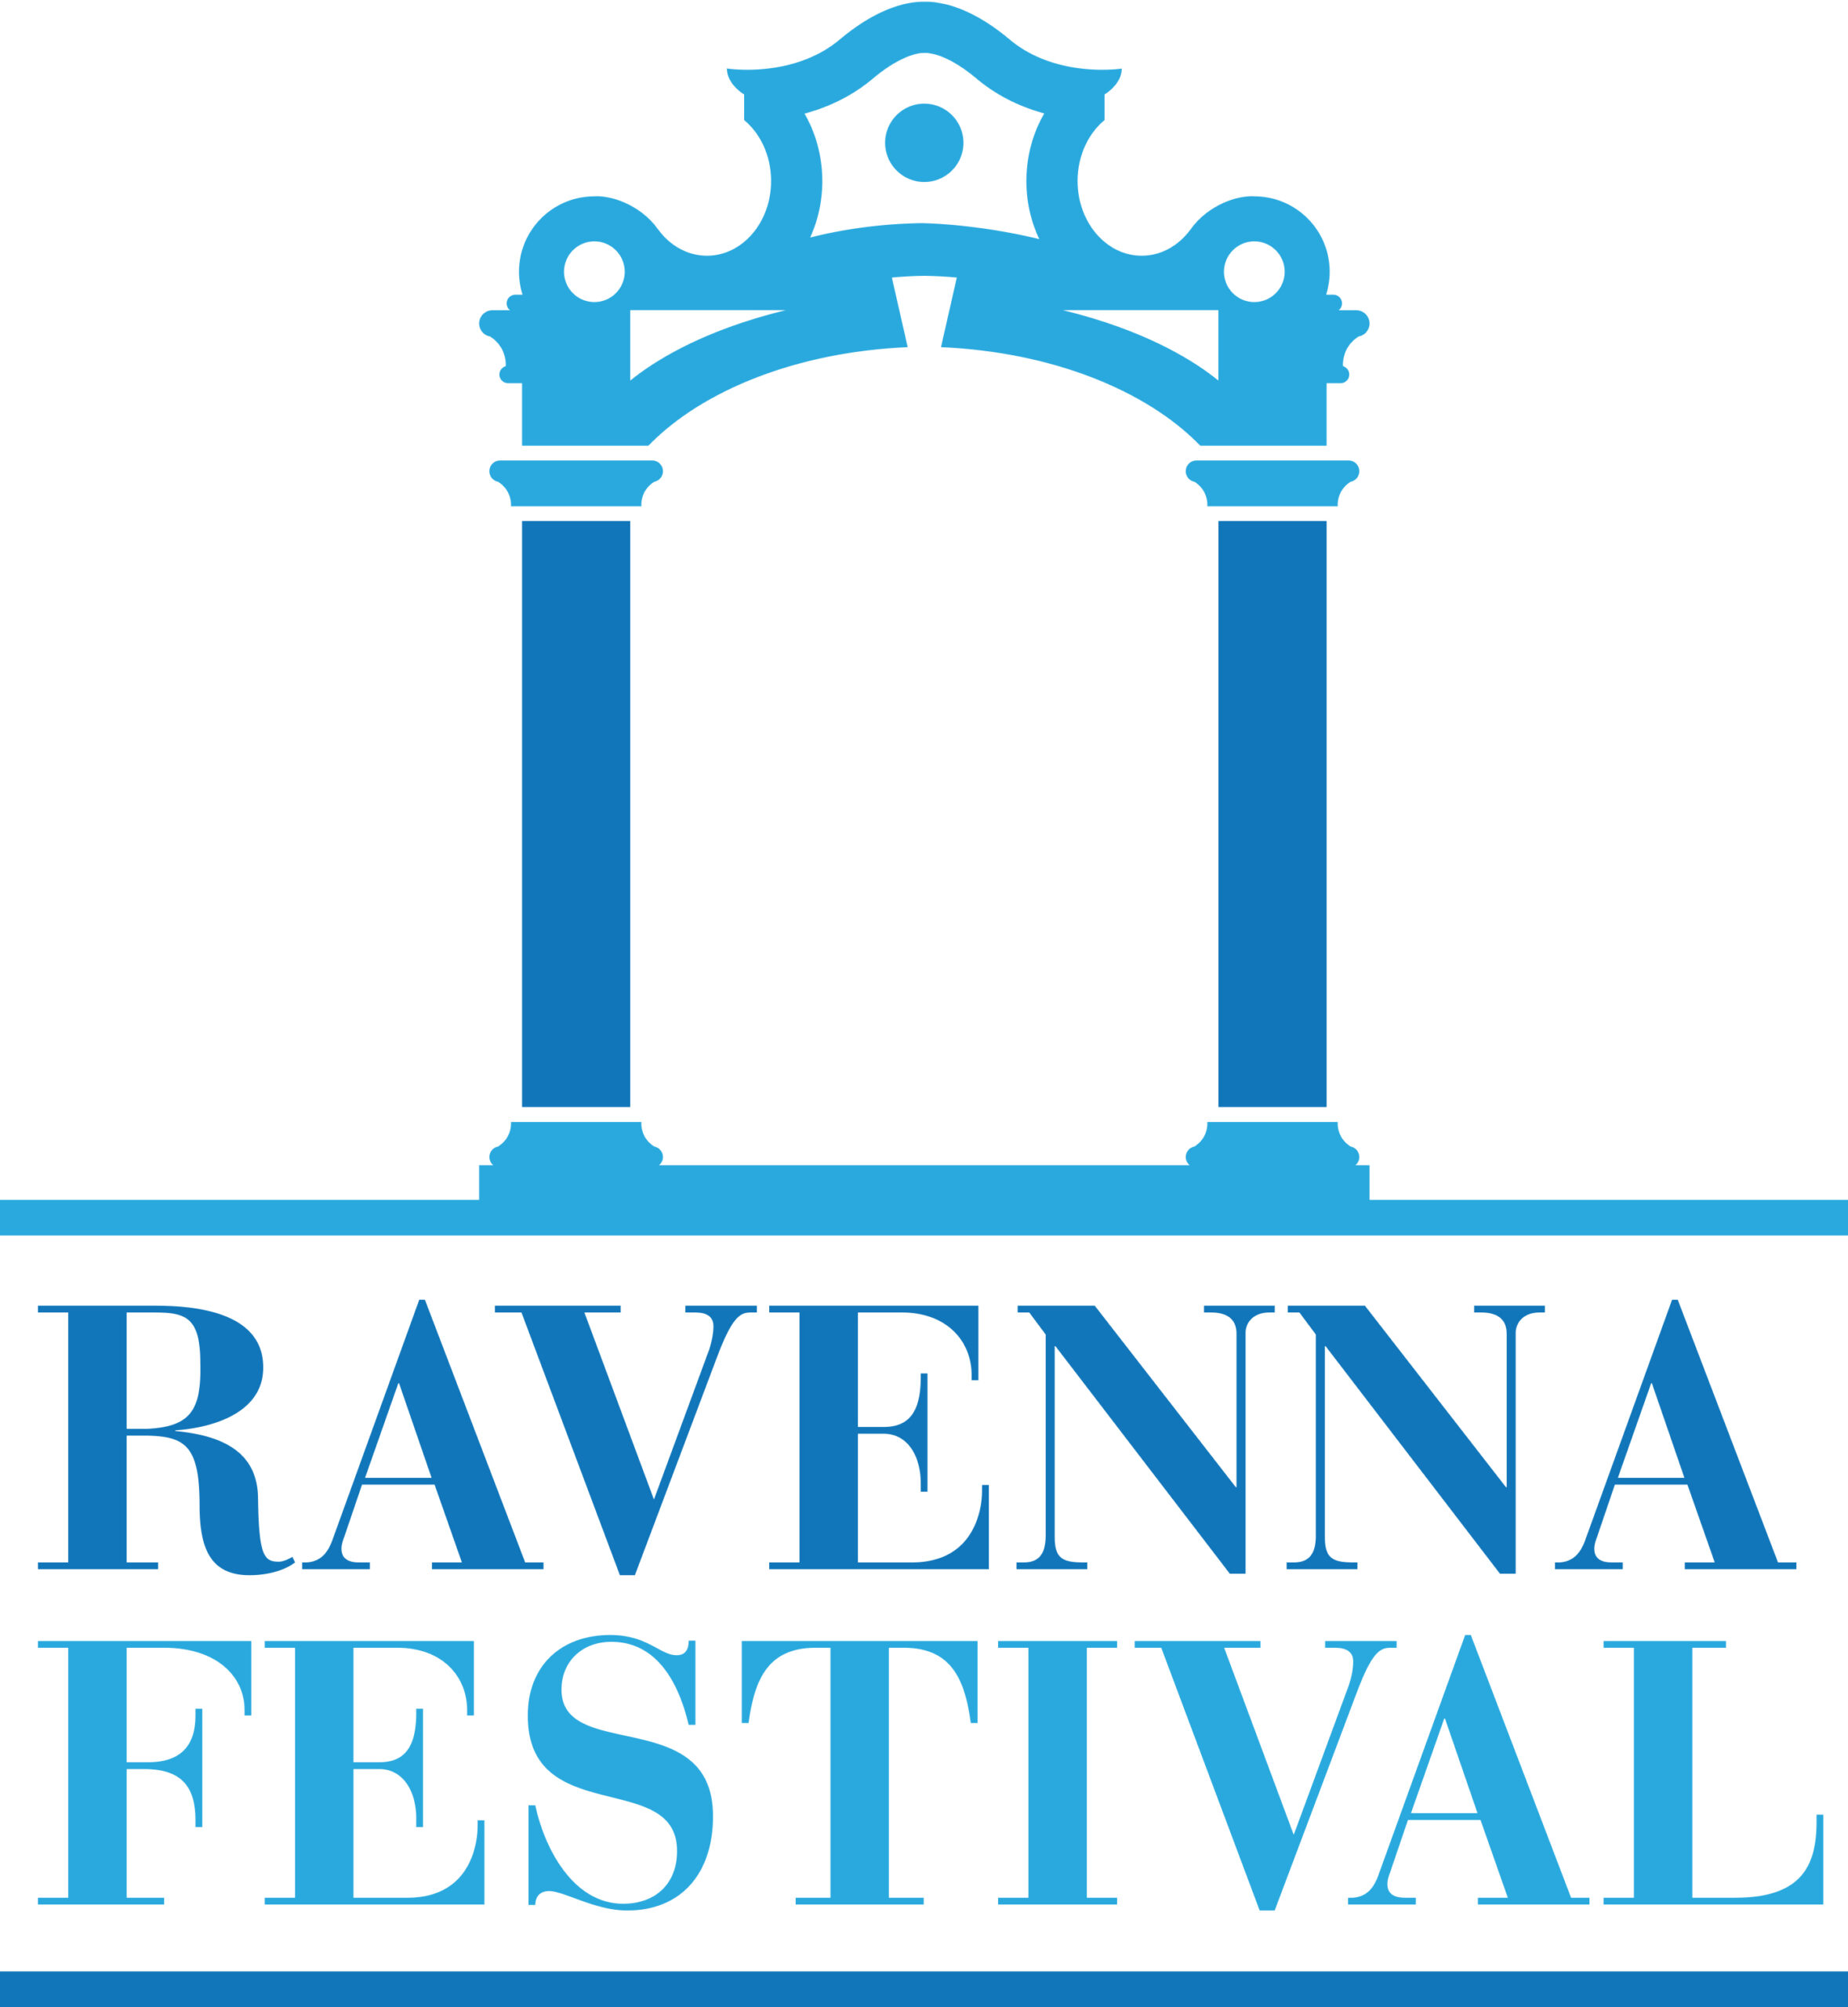 Ravenna Festival